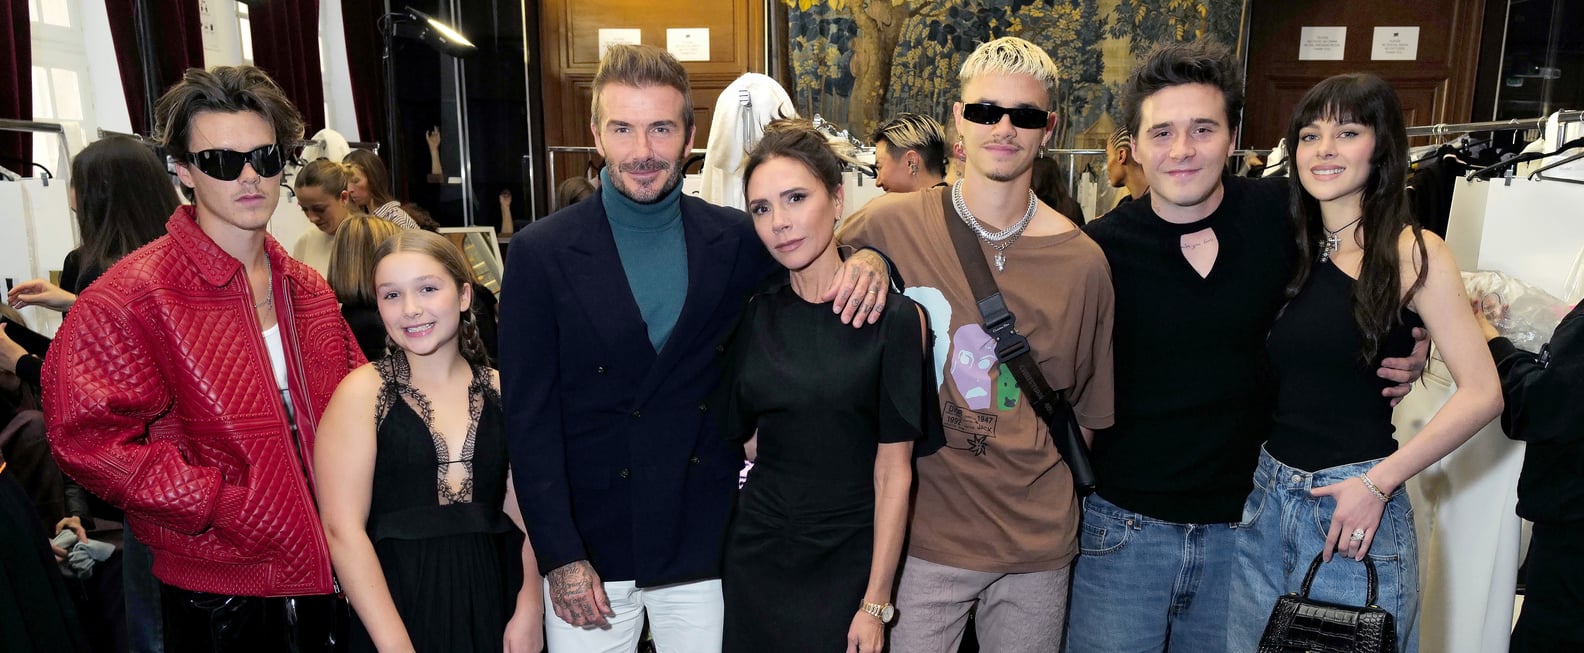 Brooklyn Beckham's Family Celebrates His Birthday | POPSUGAR Celebrity